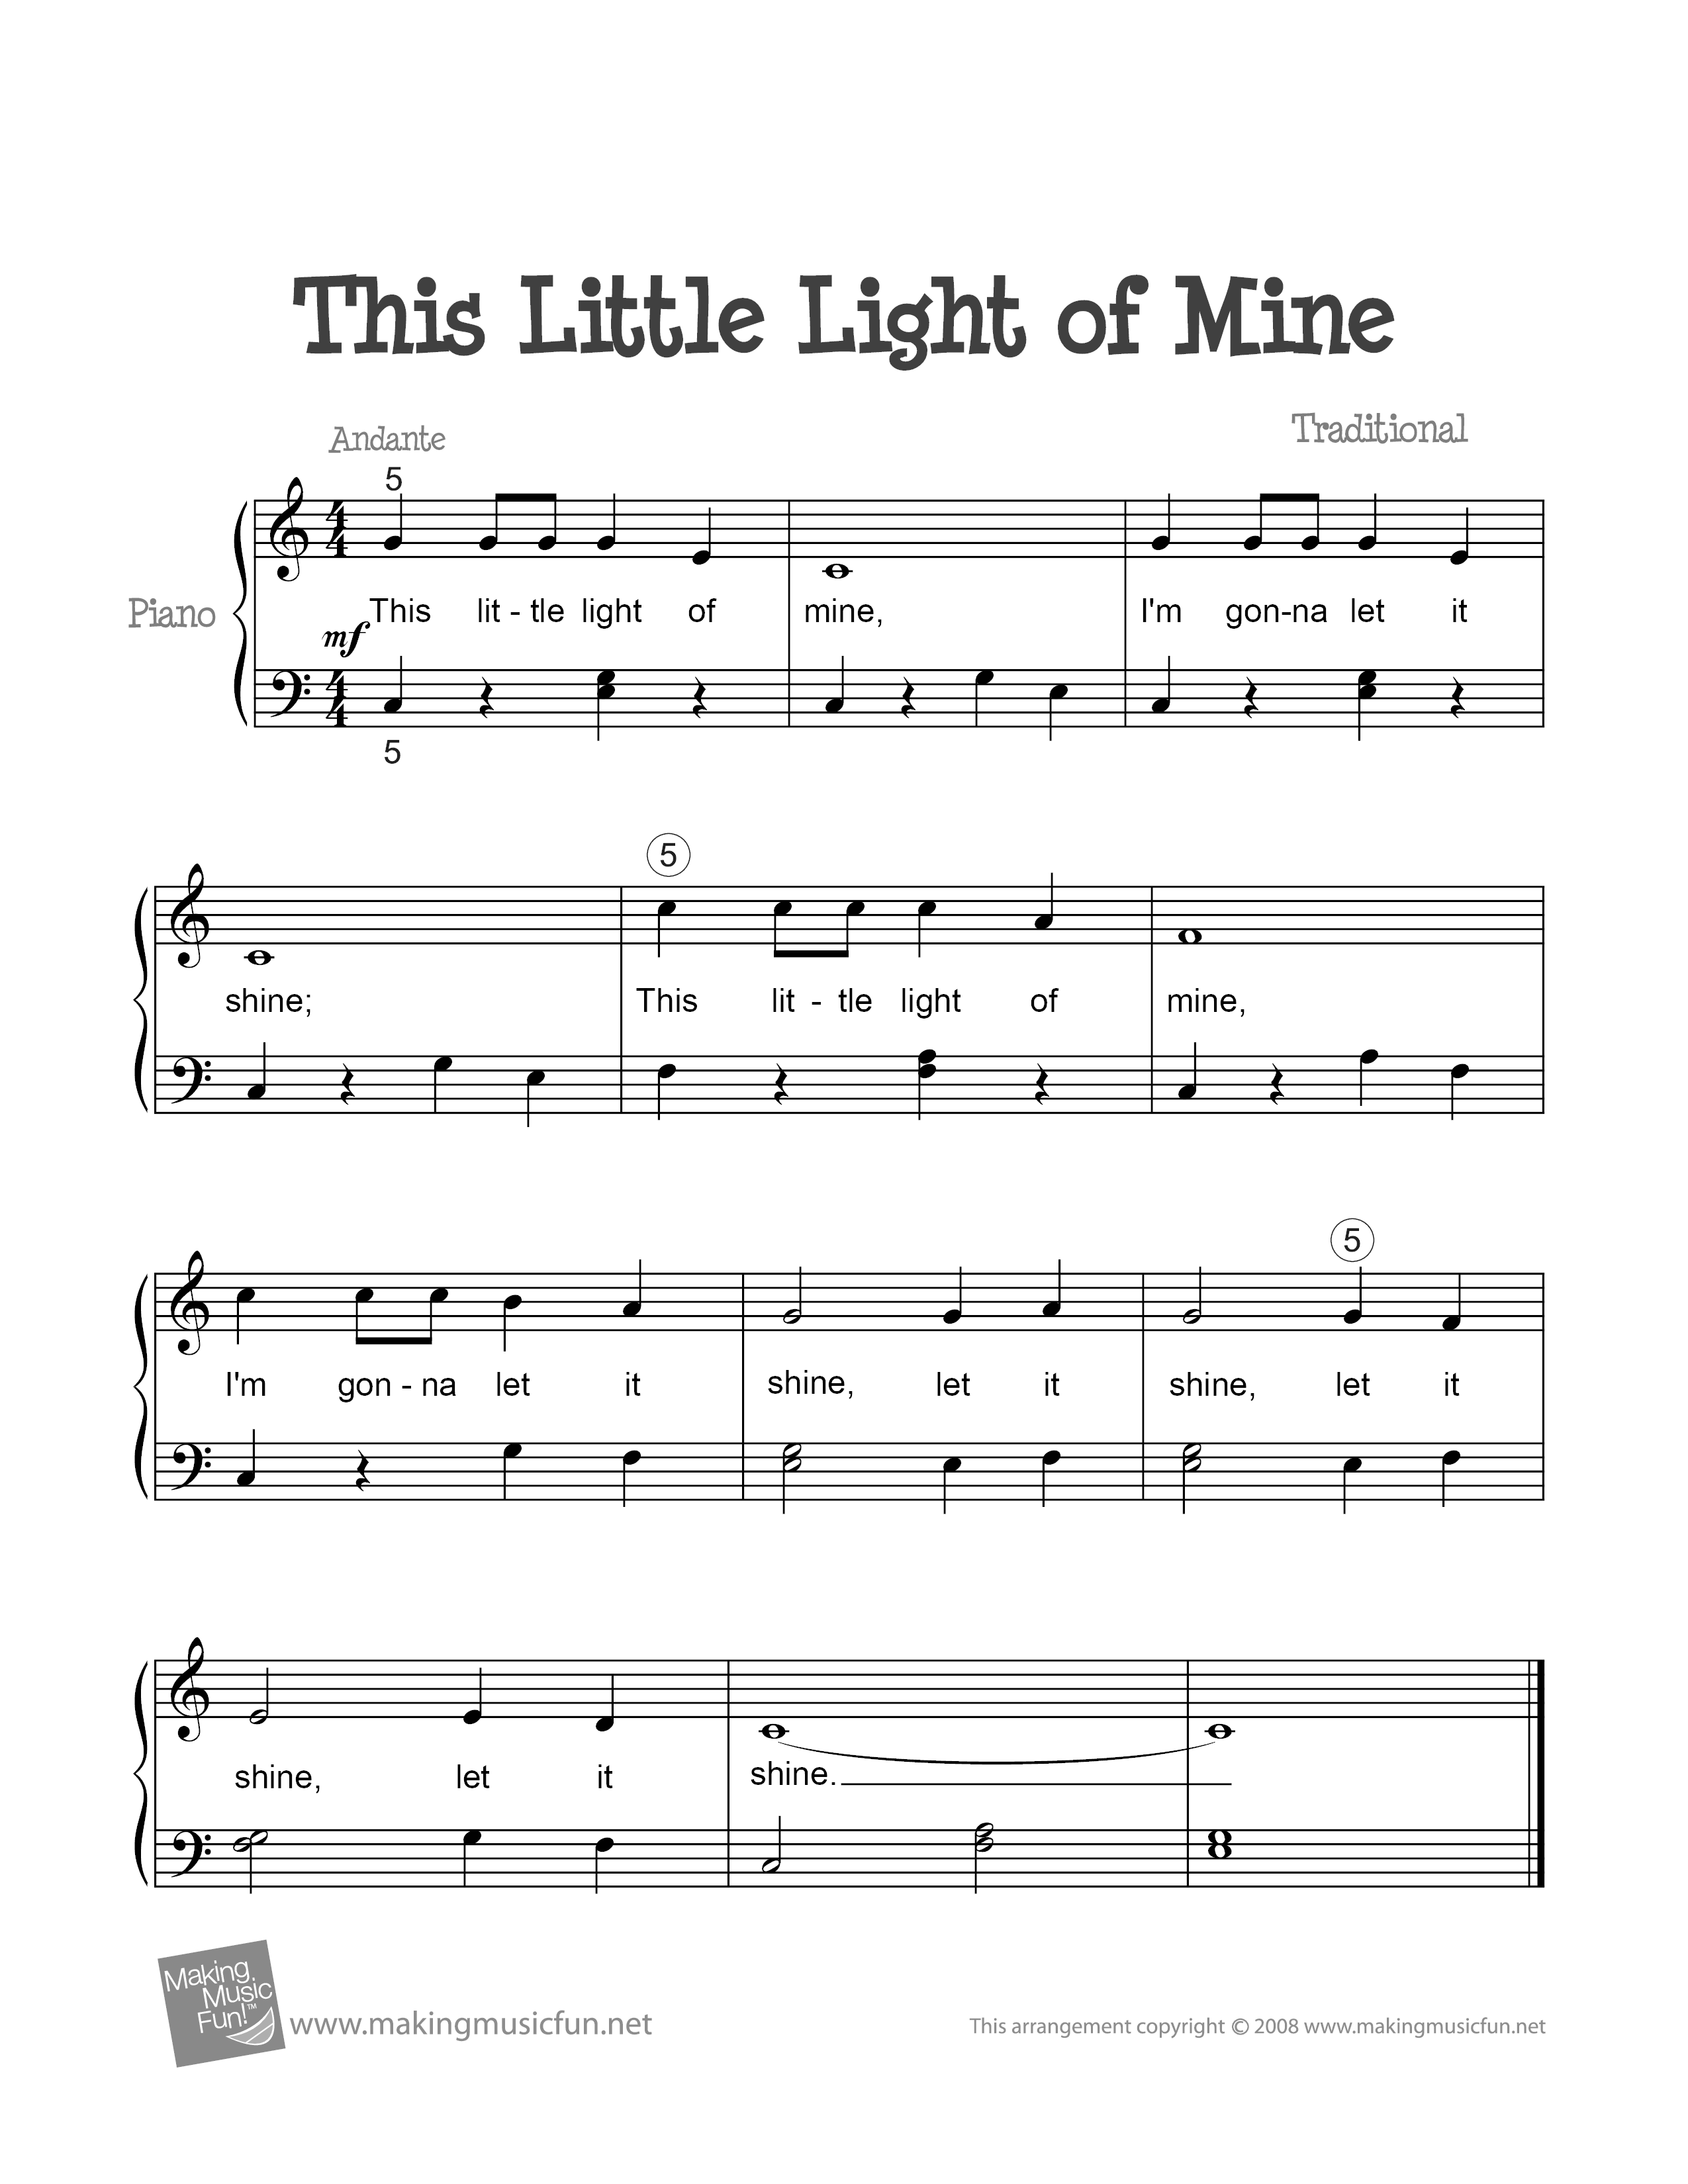 This Little Light of Mine Score